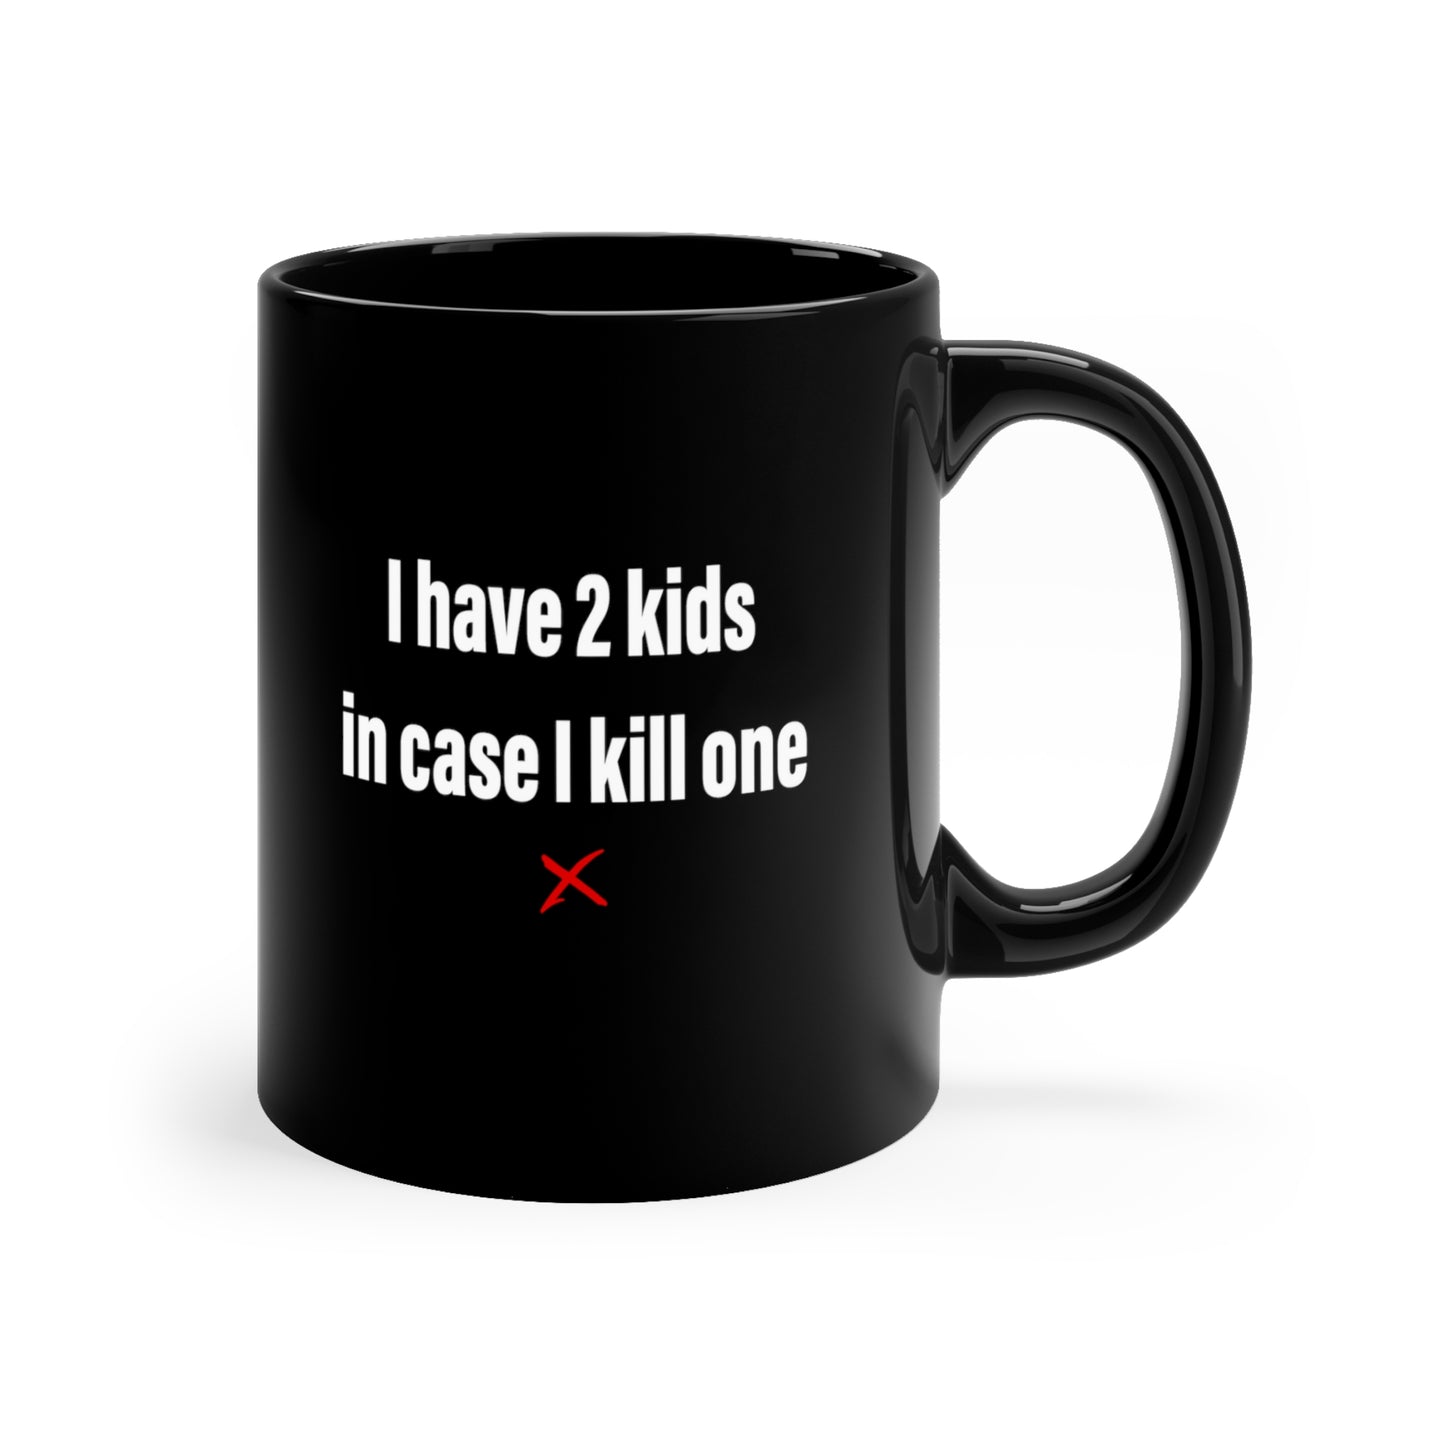 I have 2 kids in case I kill one - Mug